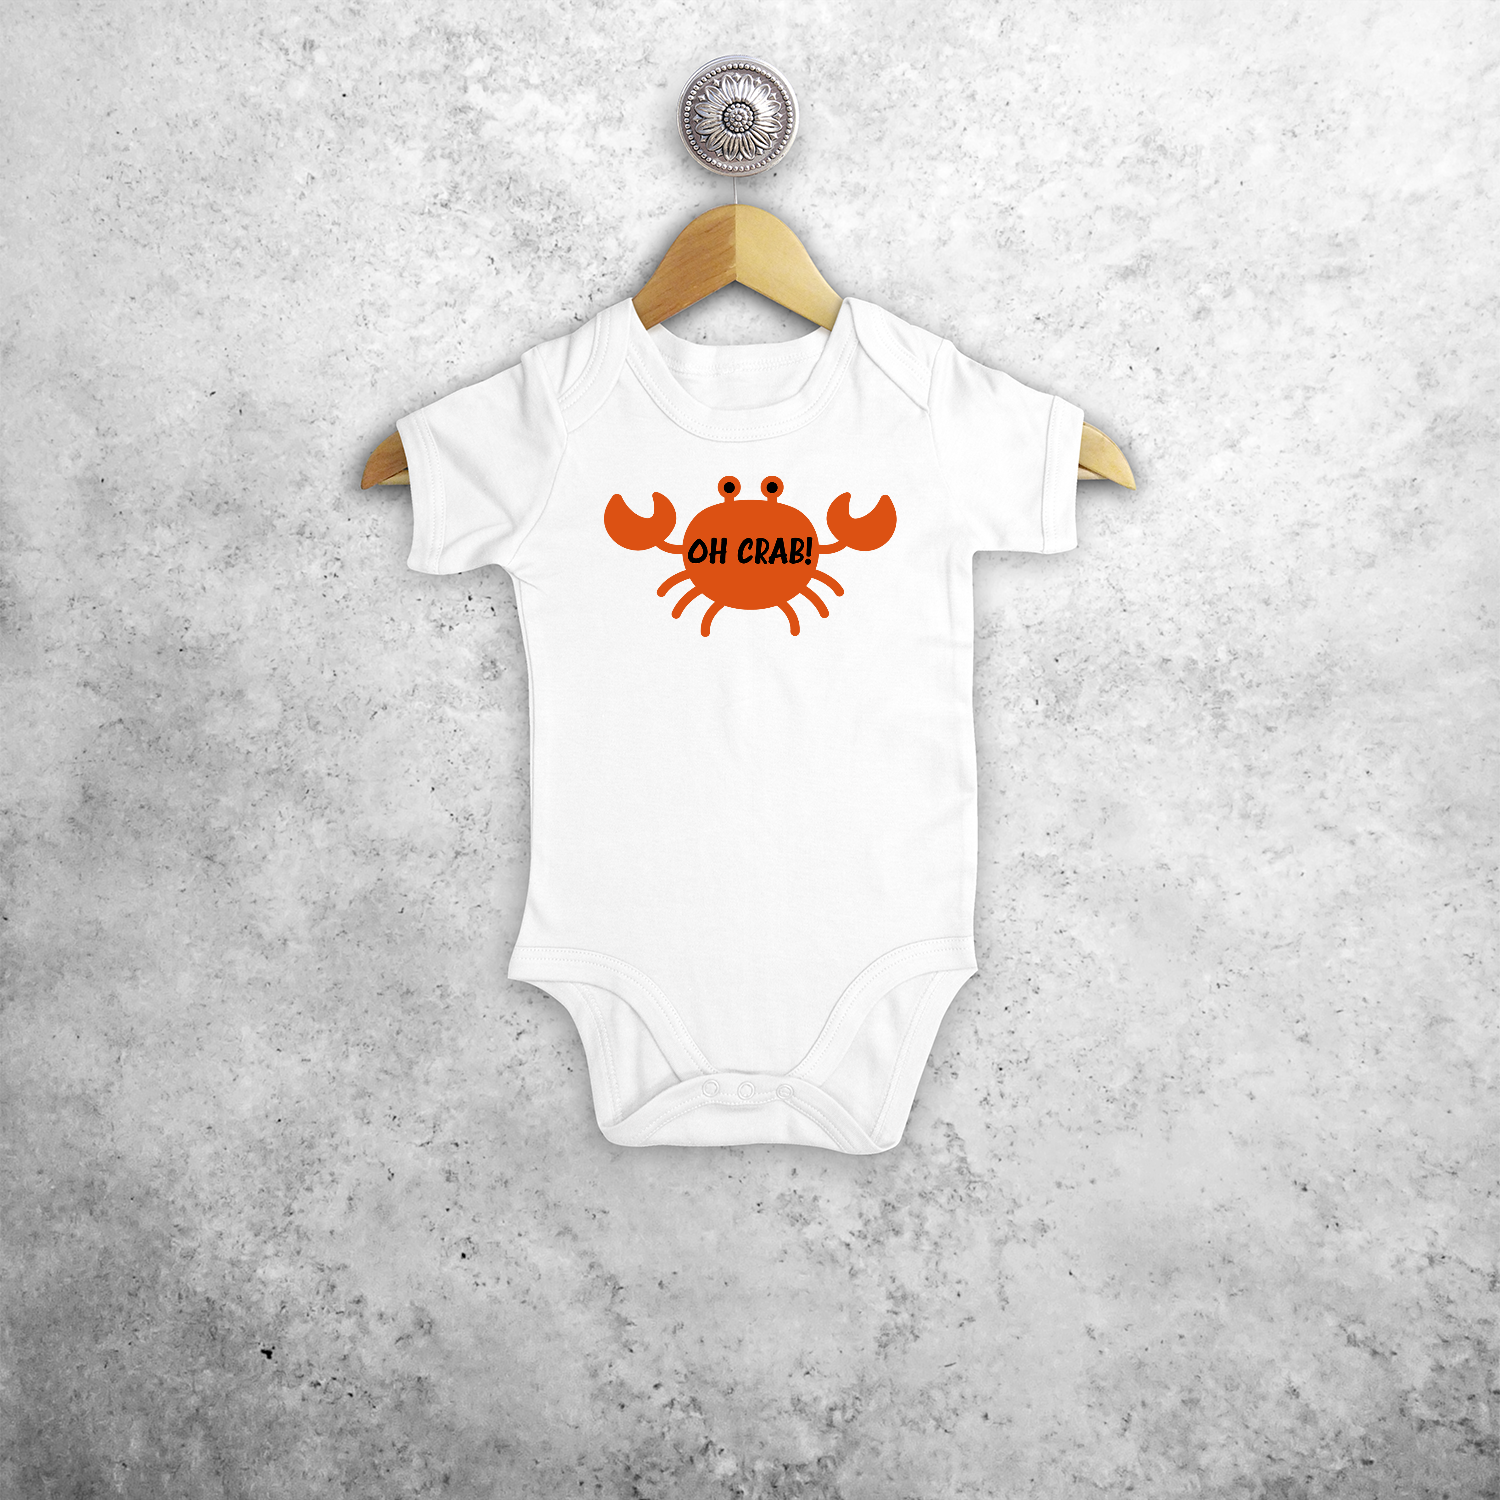 'Oh crab!' baby shortsleeve bodysuit